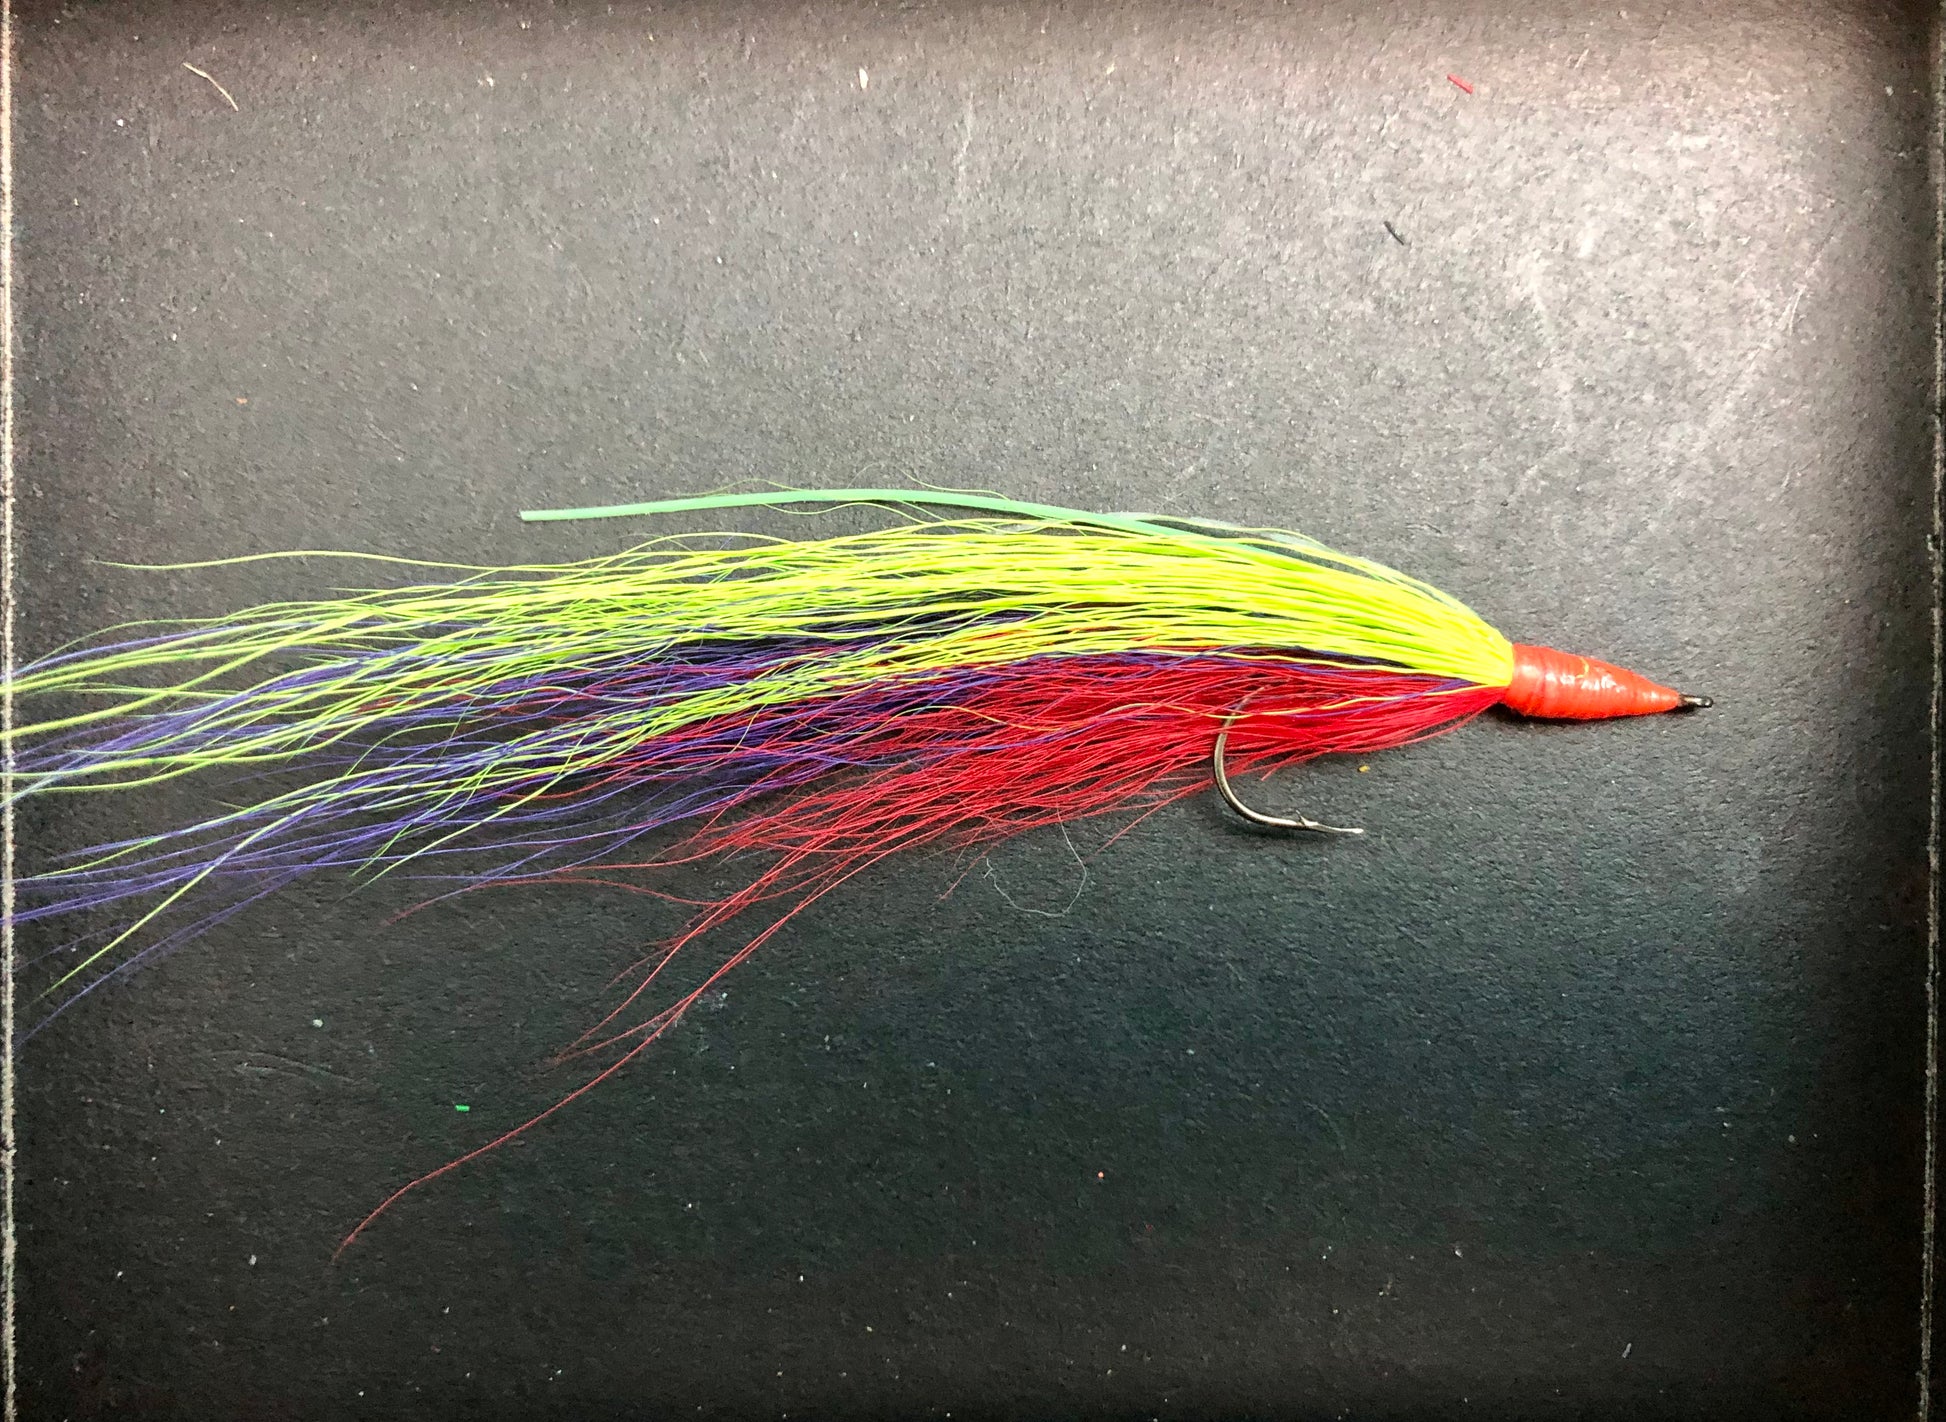 Walleye/Whitebass River flies